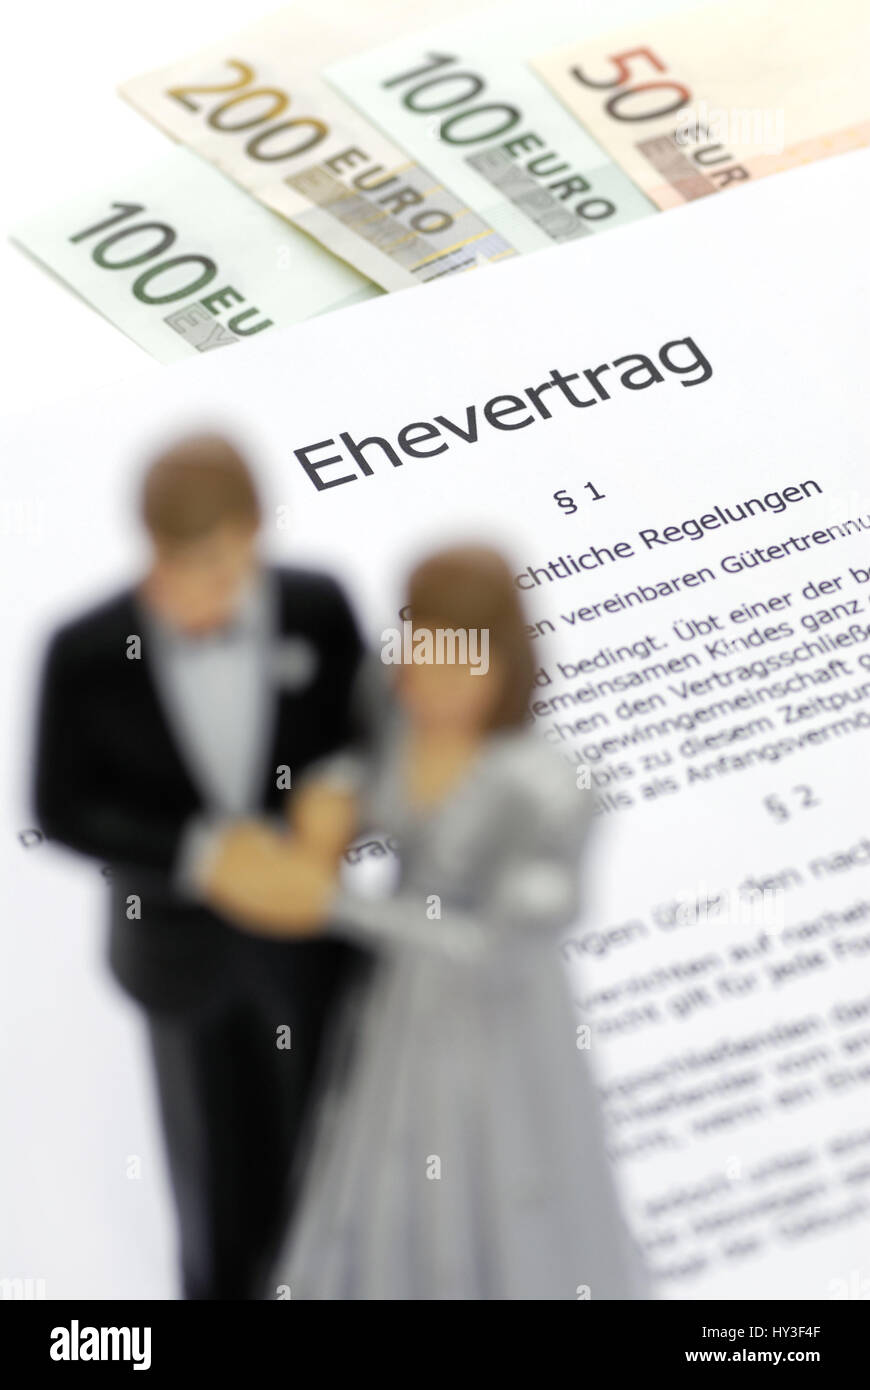 Marriage contract, Ehevertrag Stock Photo